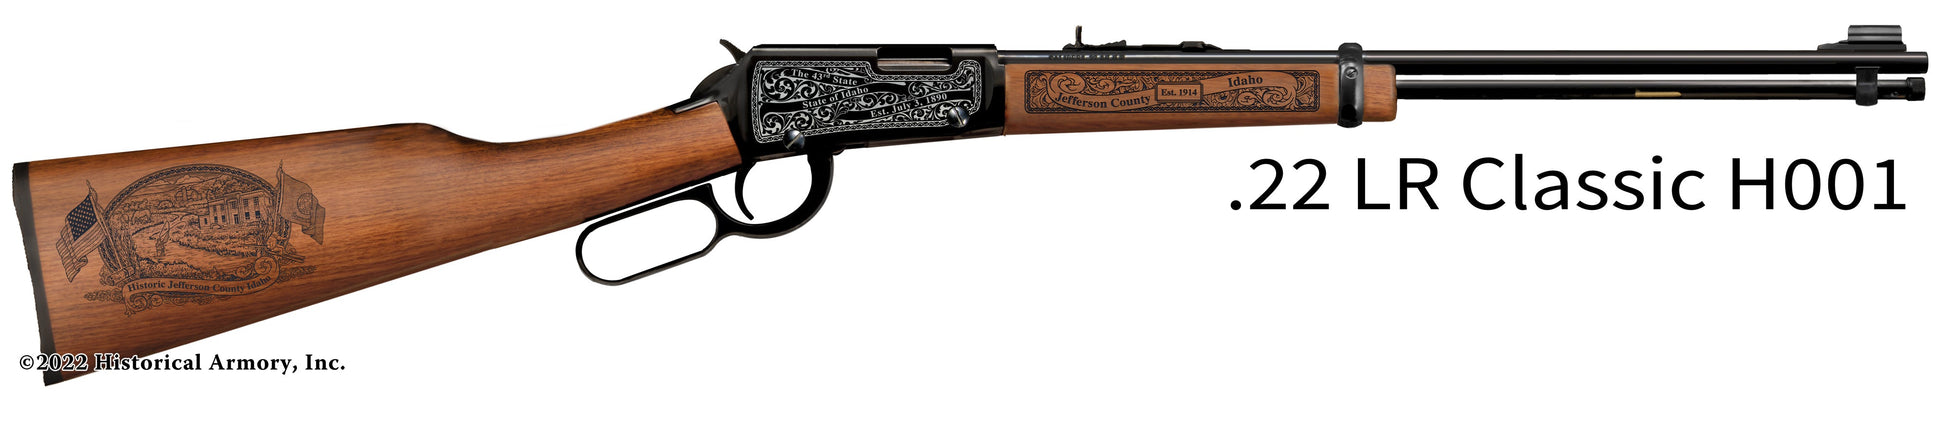 Jefferson County Idaho Engraved Henry H001 Rifle